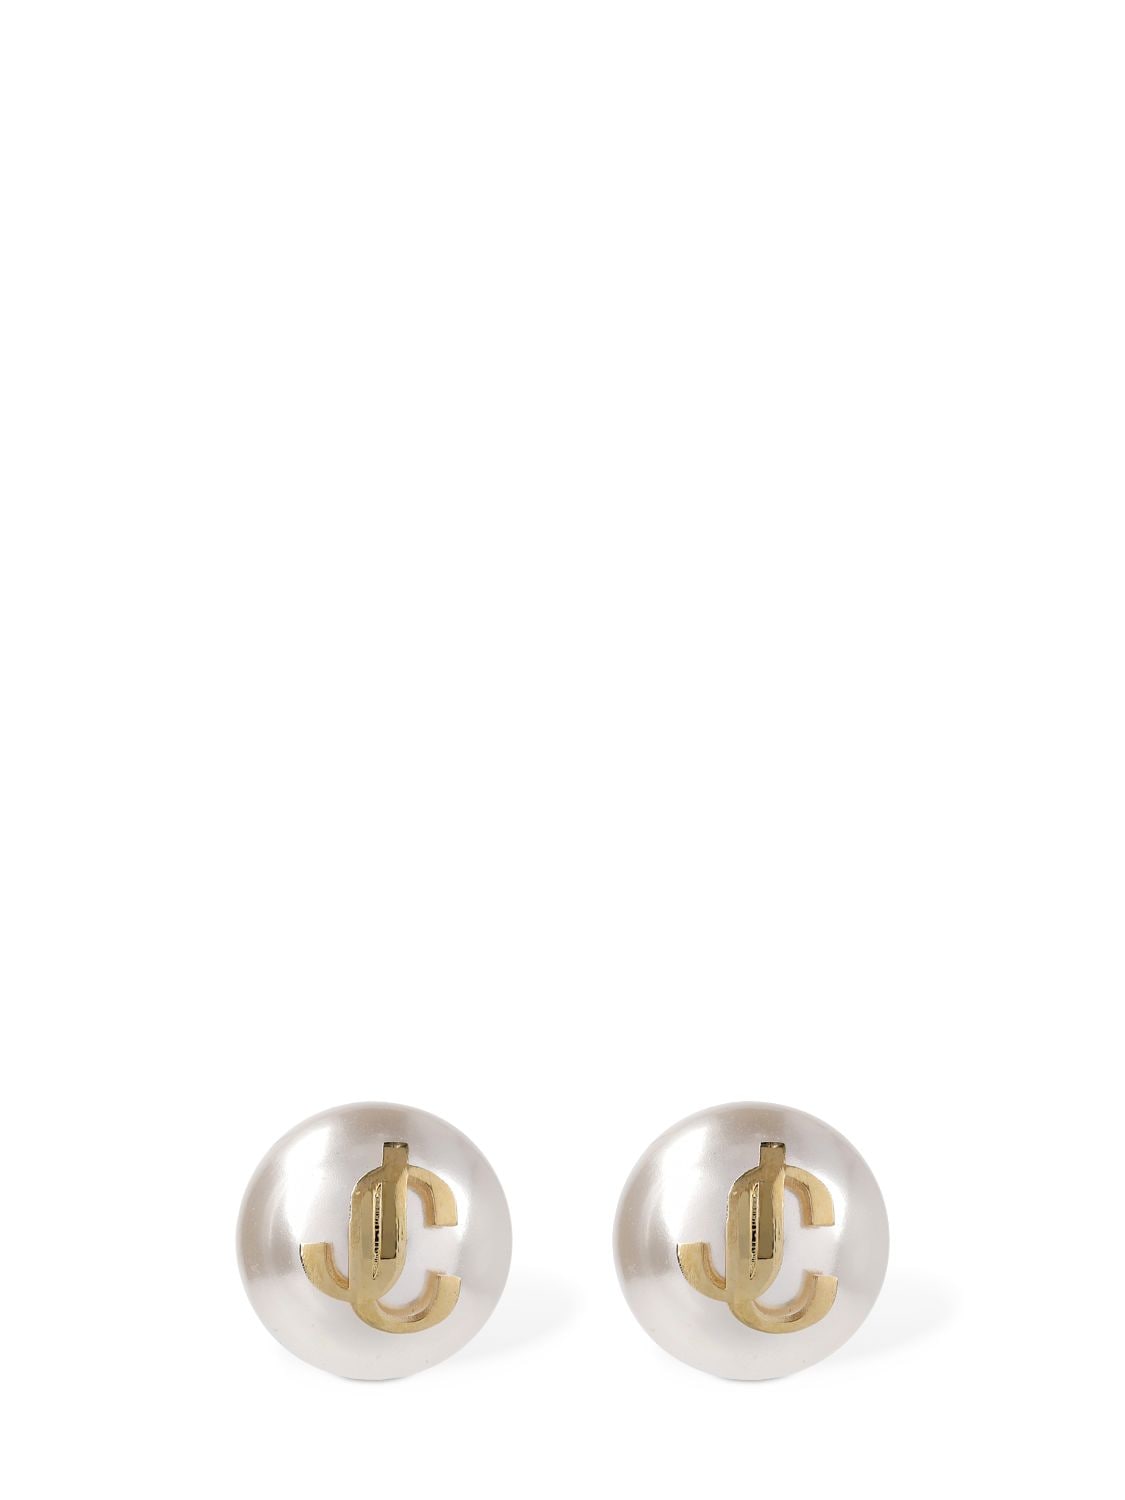 Image of Jc Imitation Pearl Stud Earrings